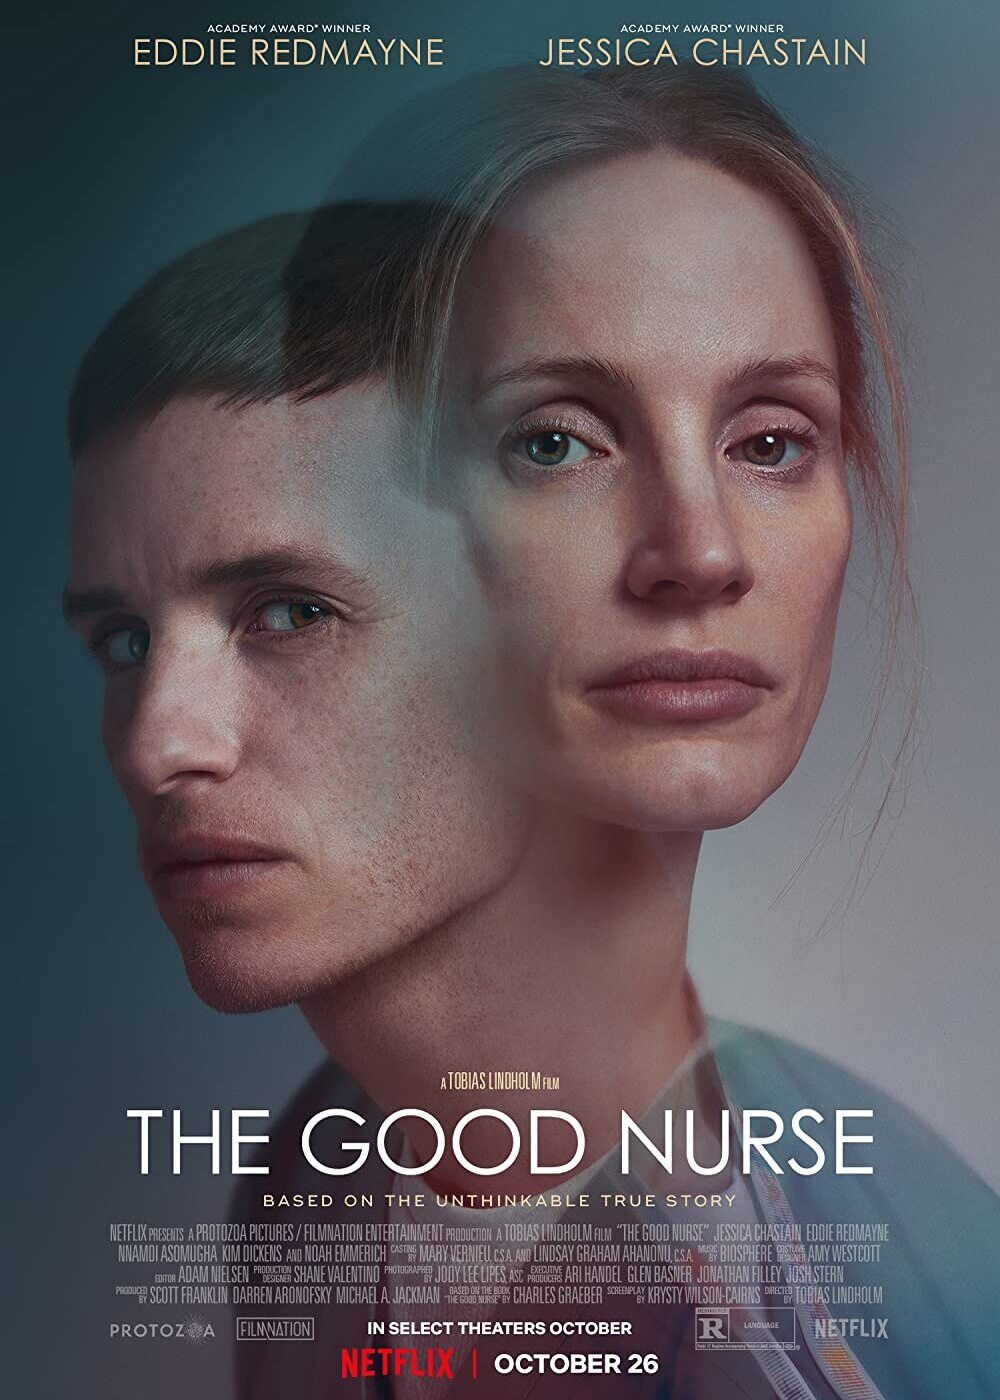 the good nurse netflix movie review